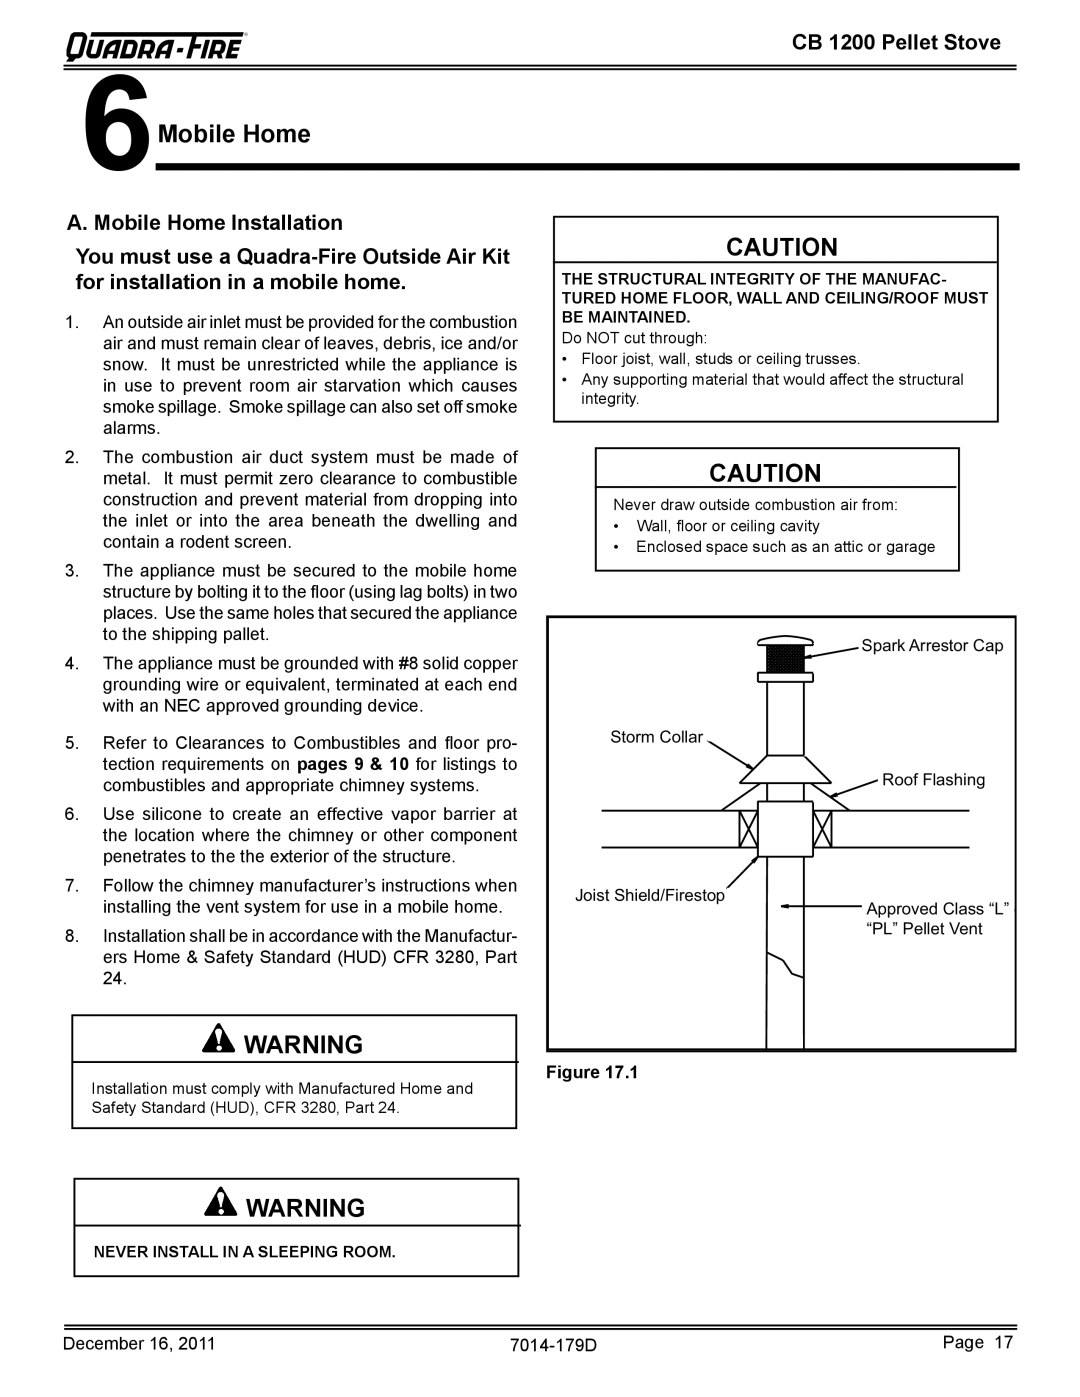 Quadra-Fire CB1200M-MBK owner manual A. Mobile Home Installation, CB 1200 Pellet Stove 